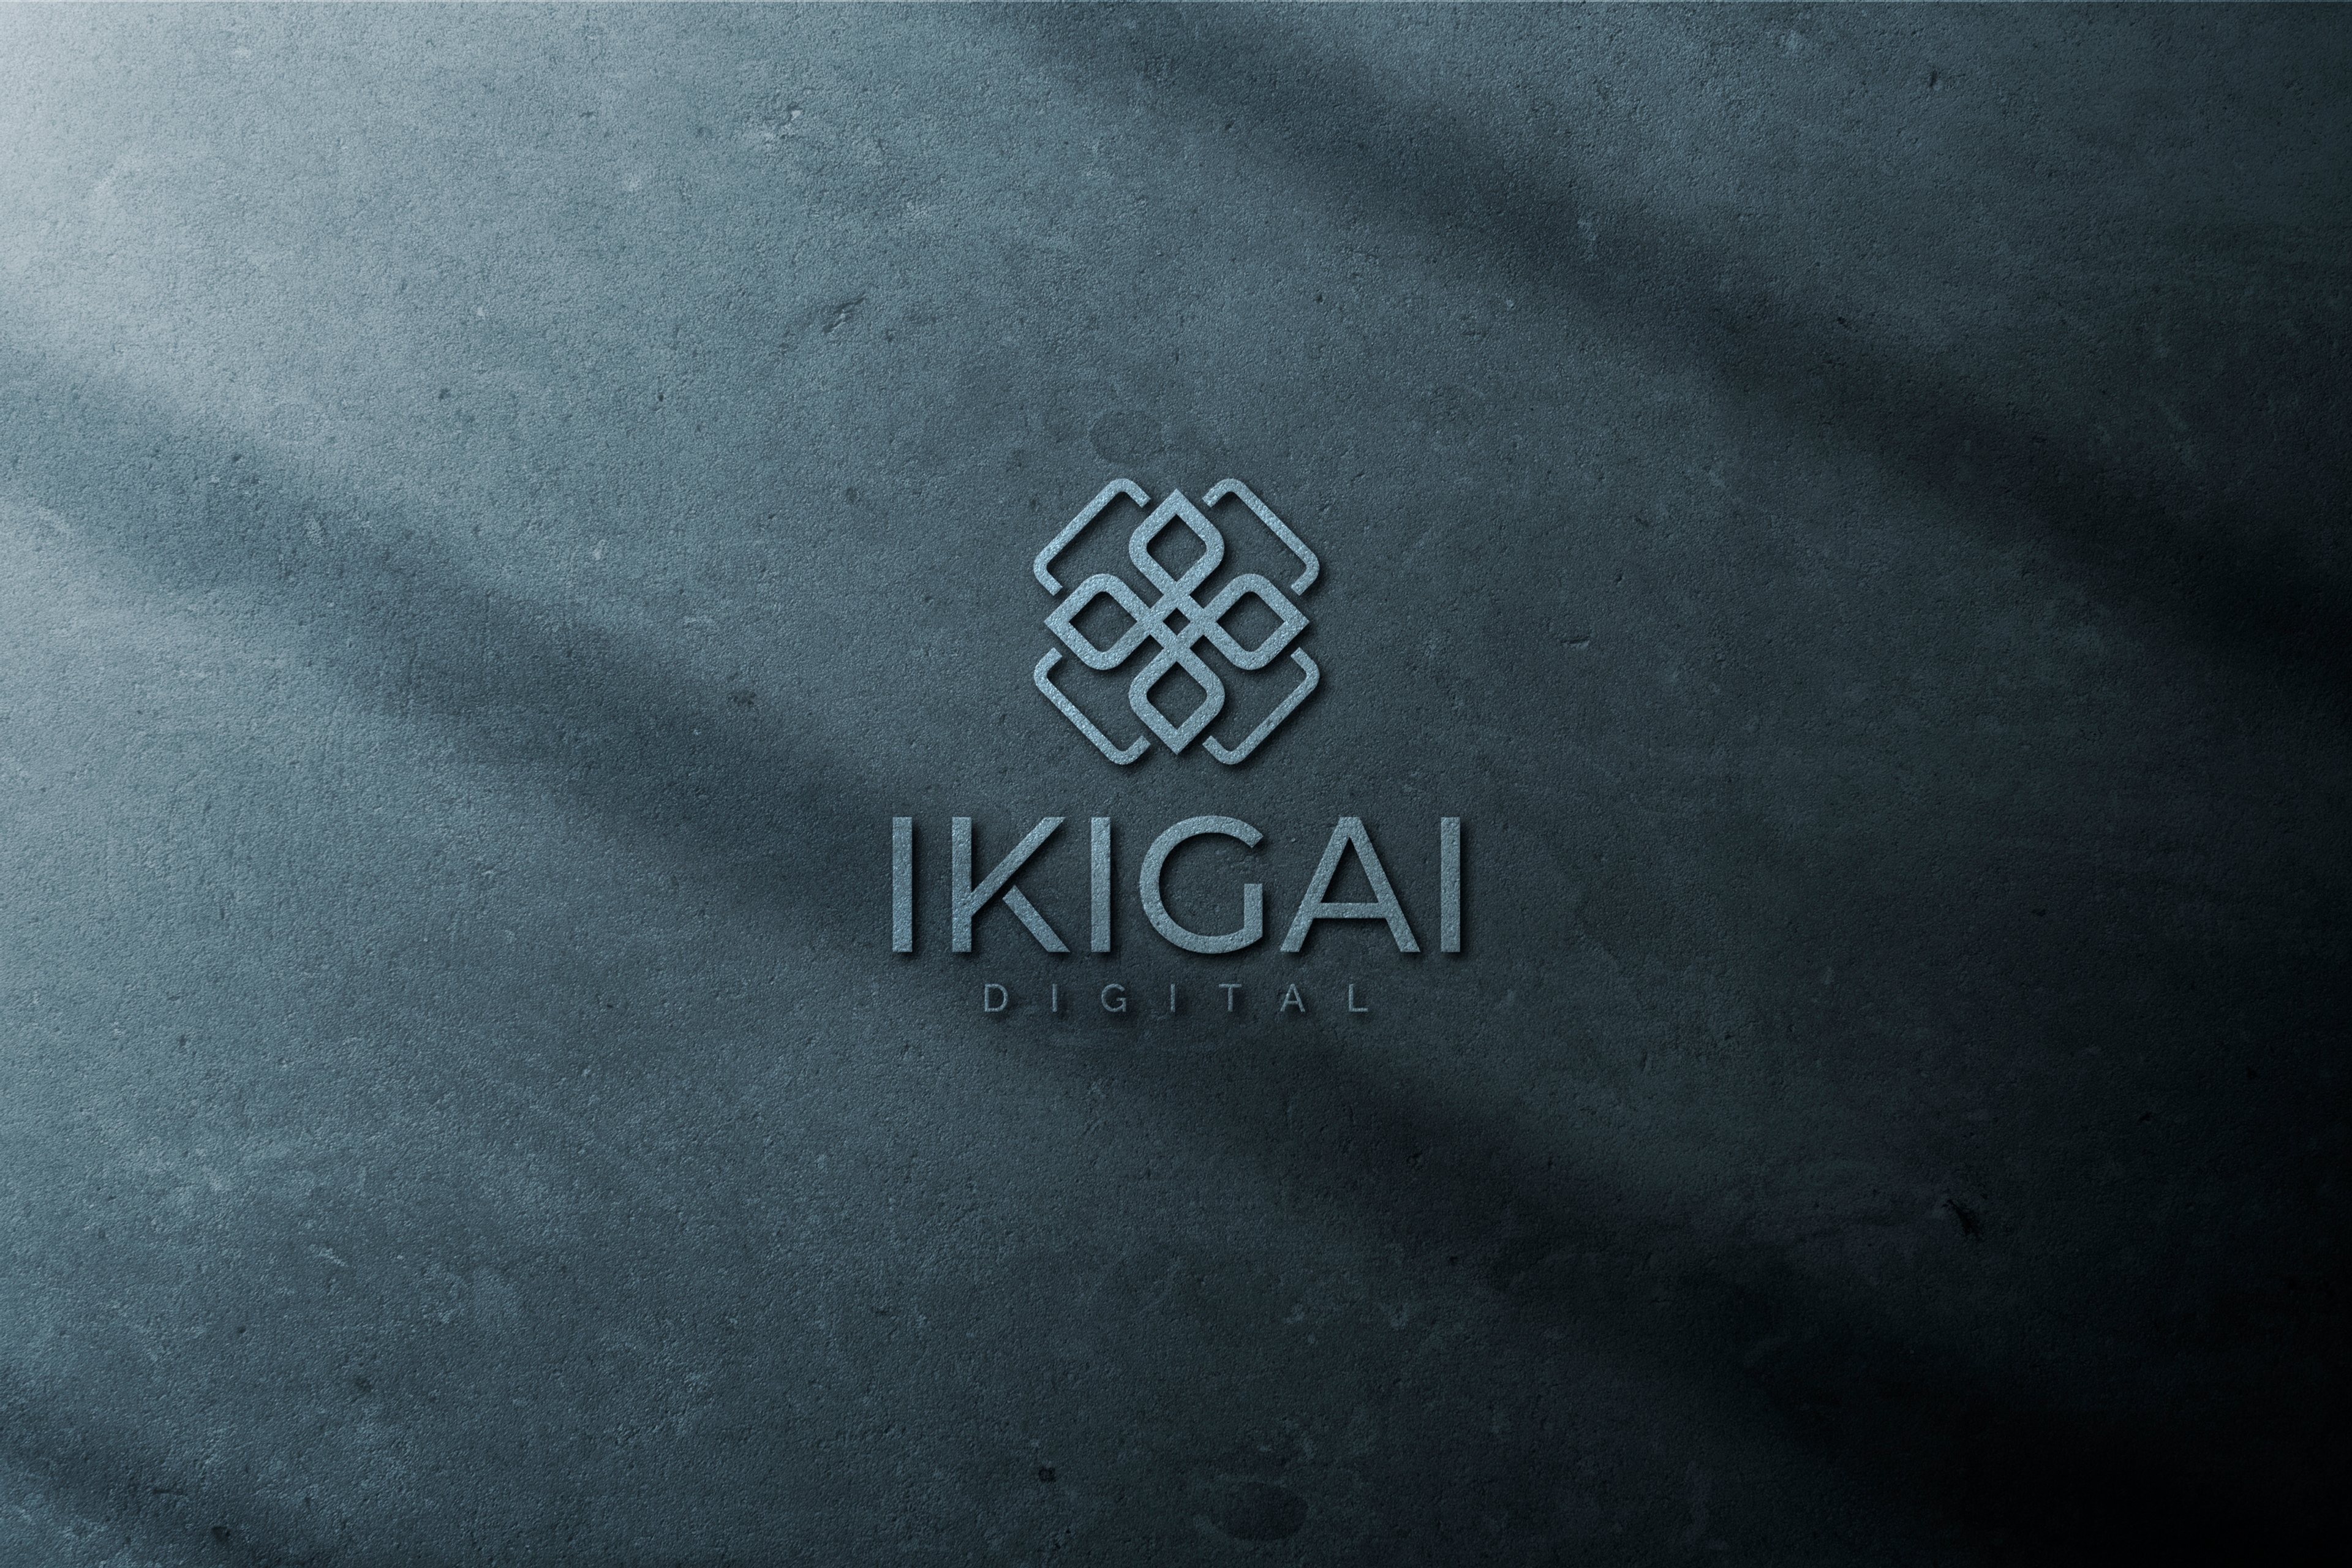 Ikigai is born